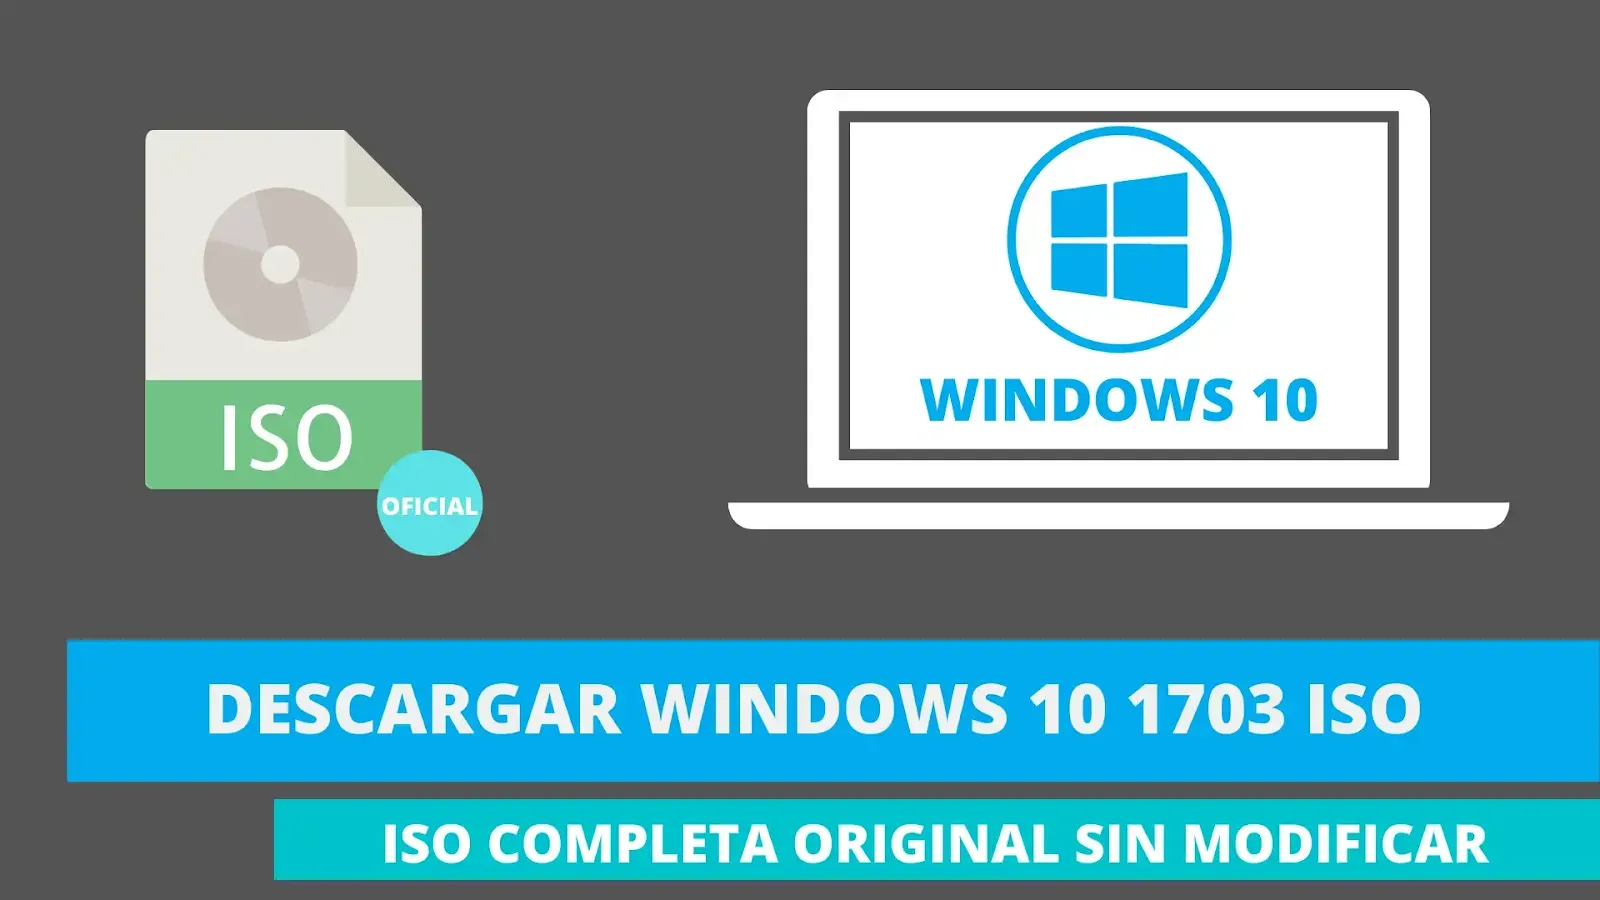 DESCARGAR WINDOWS 10 1703 ISO 1 LINK 